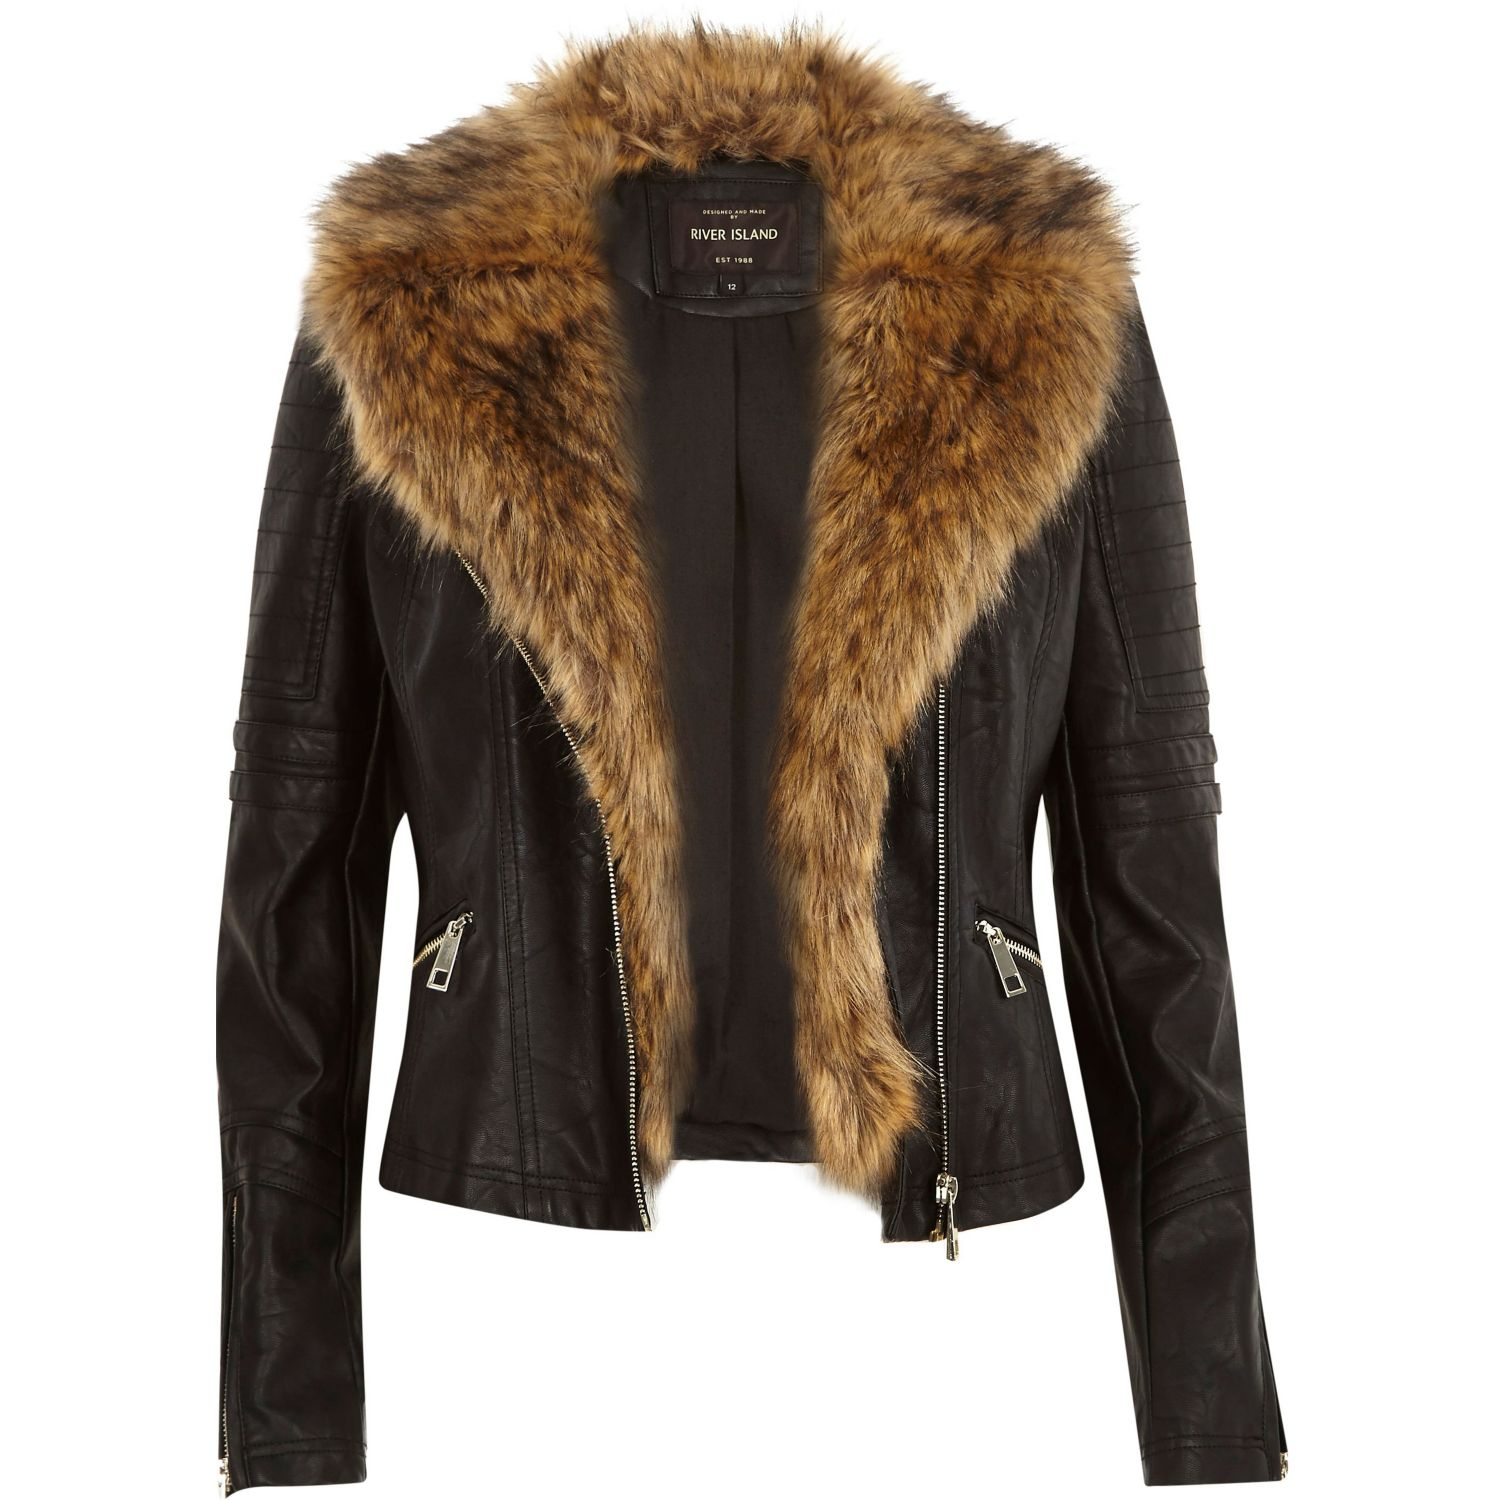 Black leather jacket with brown fur collar – Modern fashion jacket ...